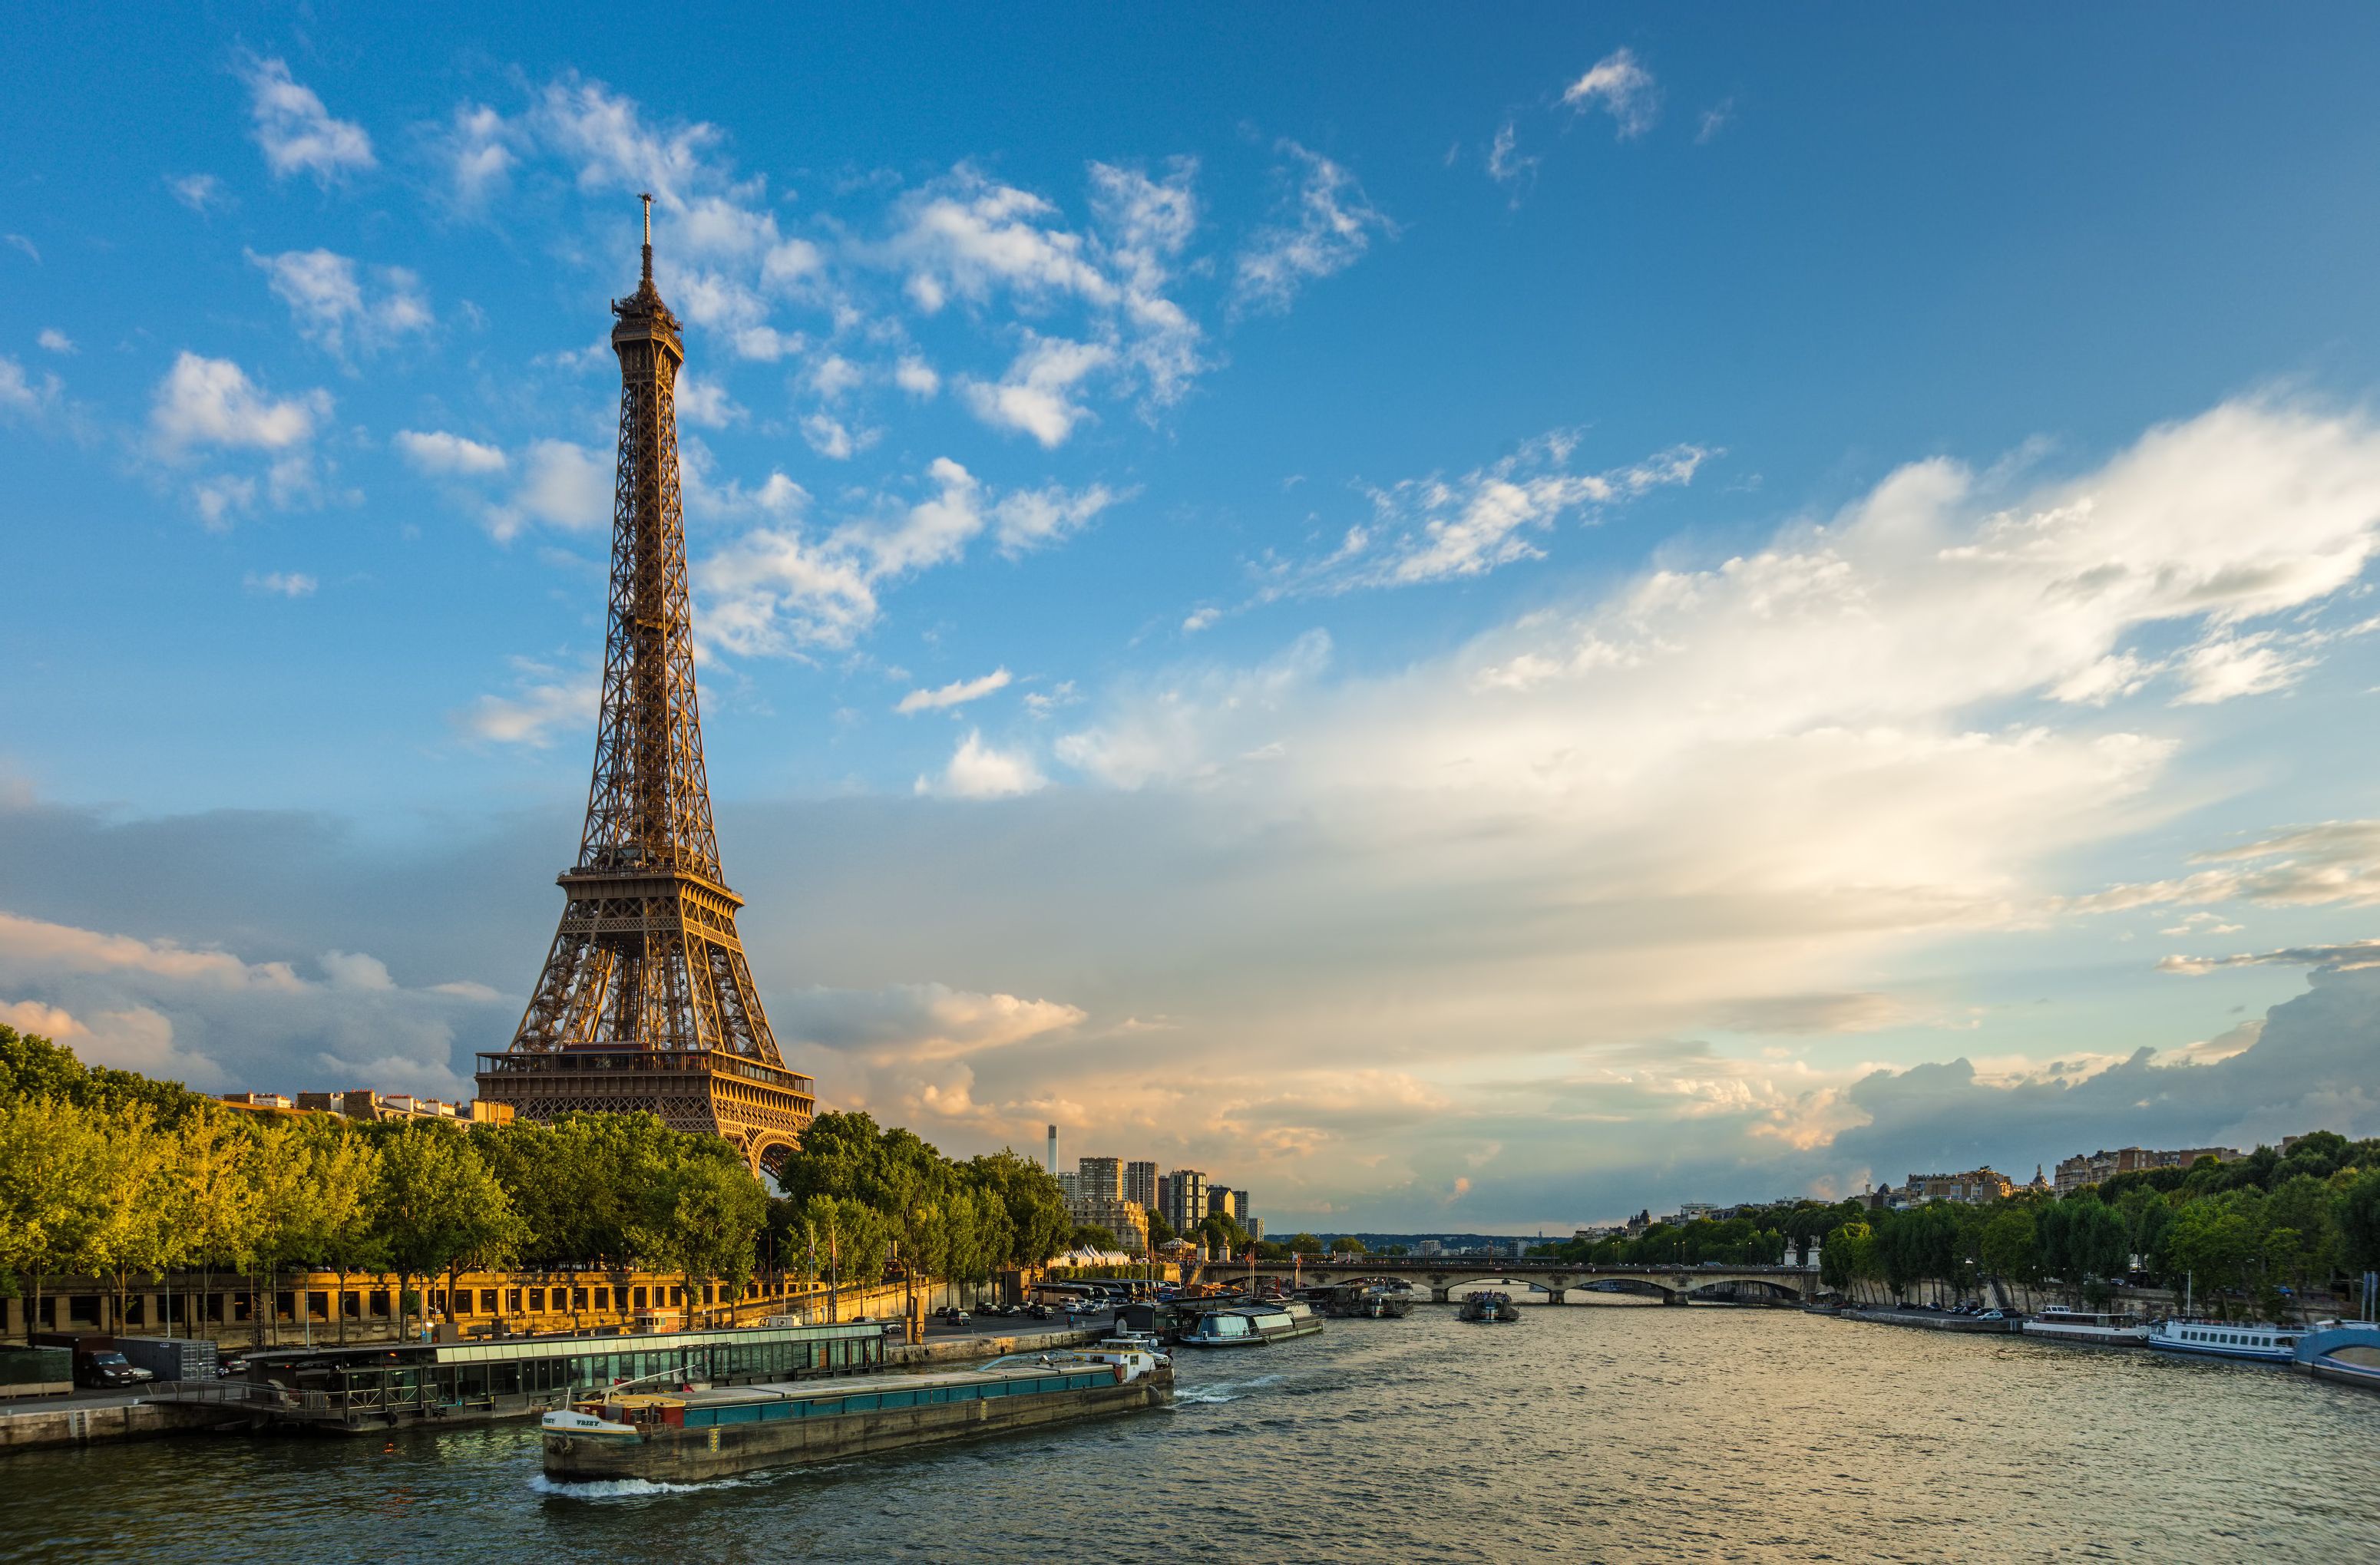 France pictures. Эйфель башня. Франция Париж Эйфелева башня. Эйфелева башня в Париже фото. Эйфелева башня река сена.